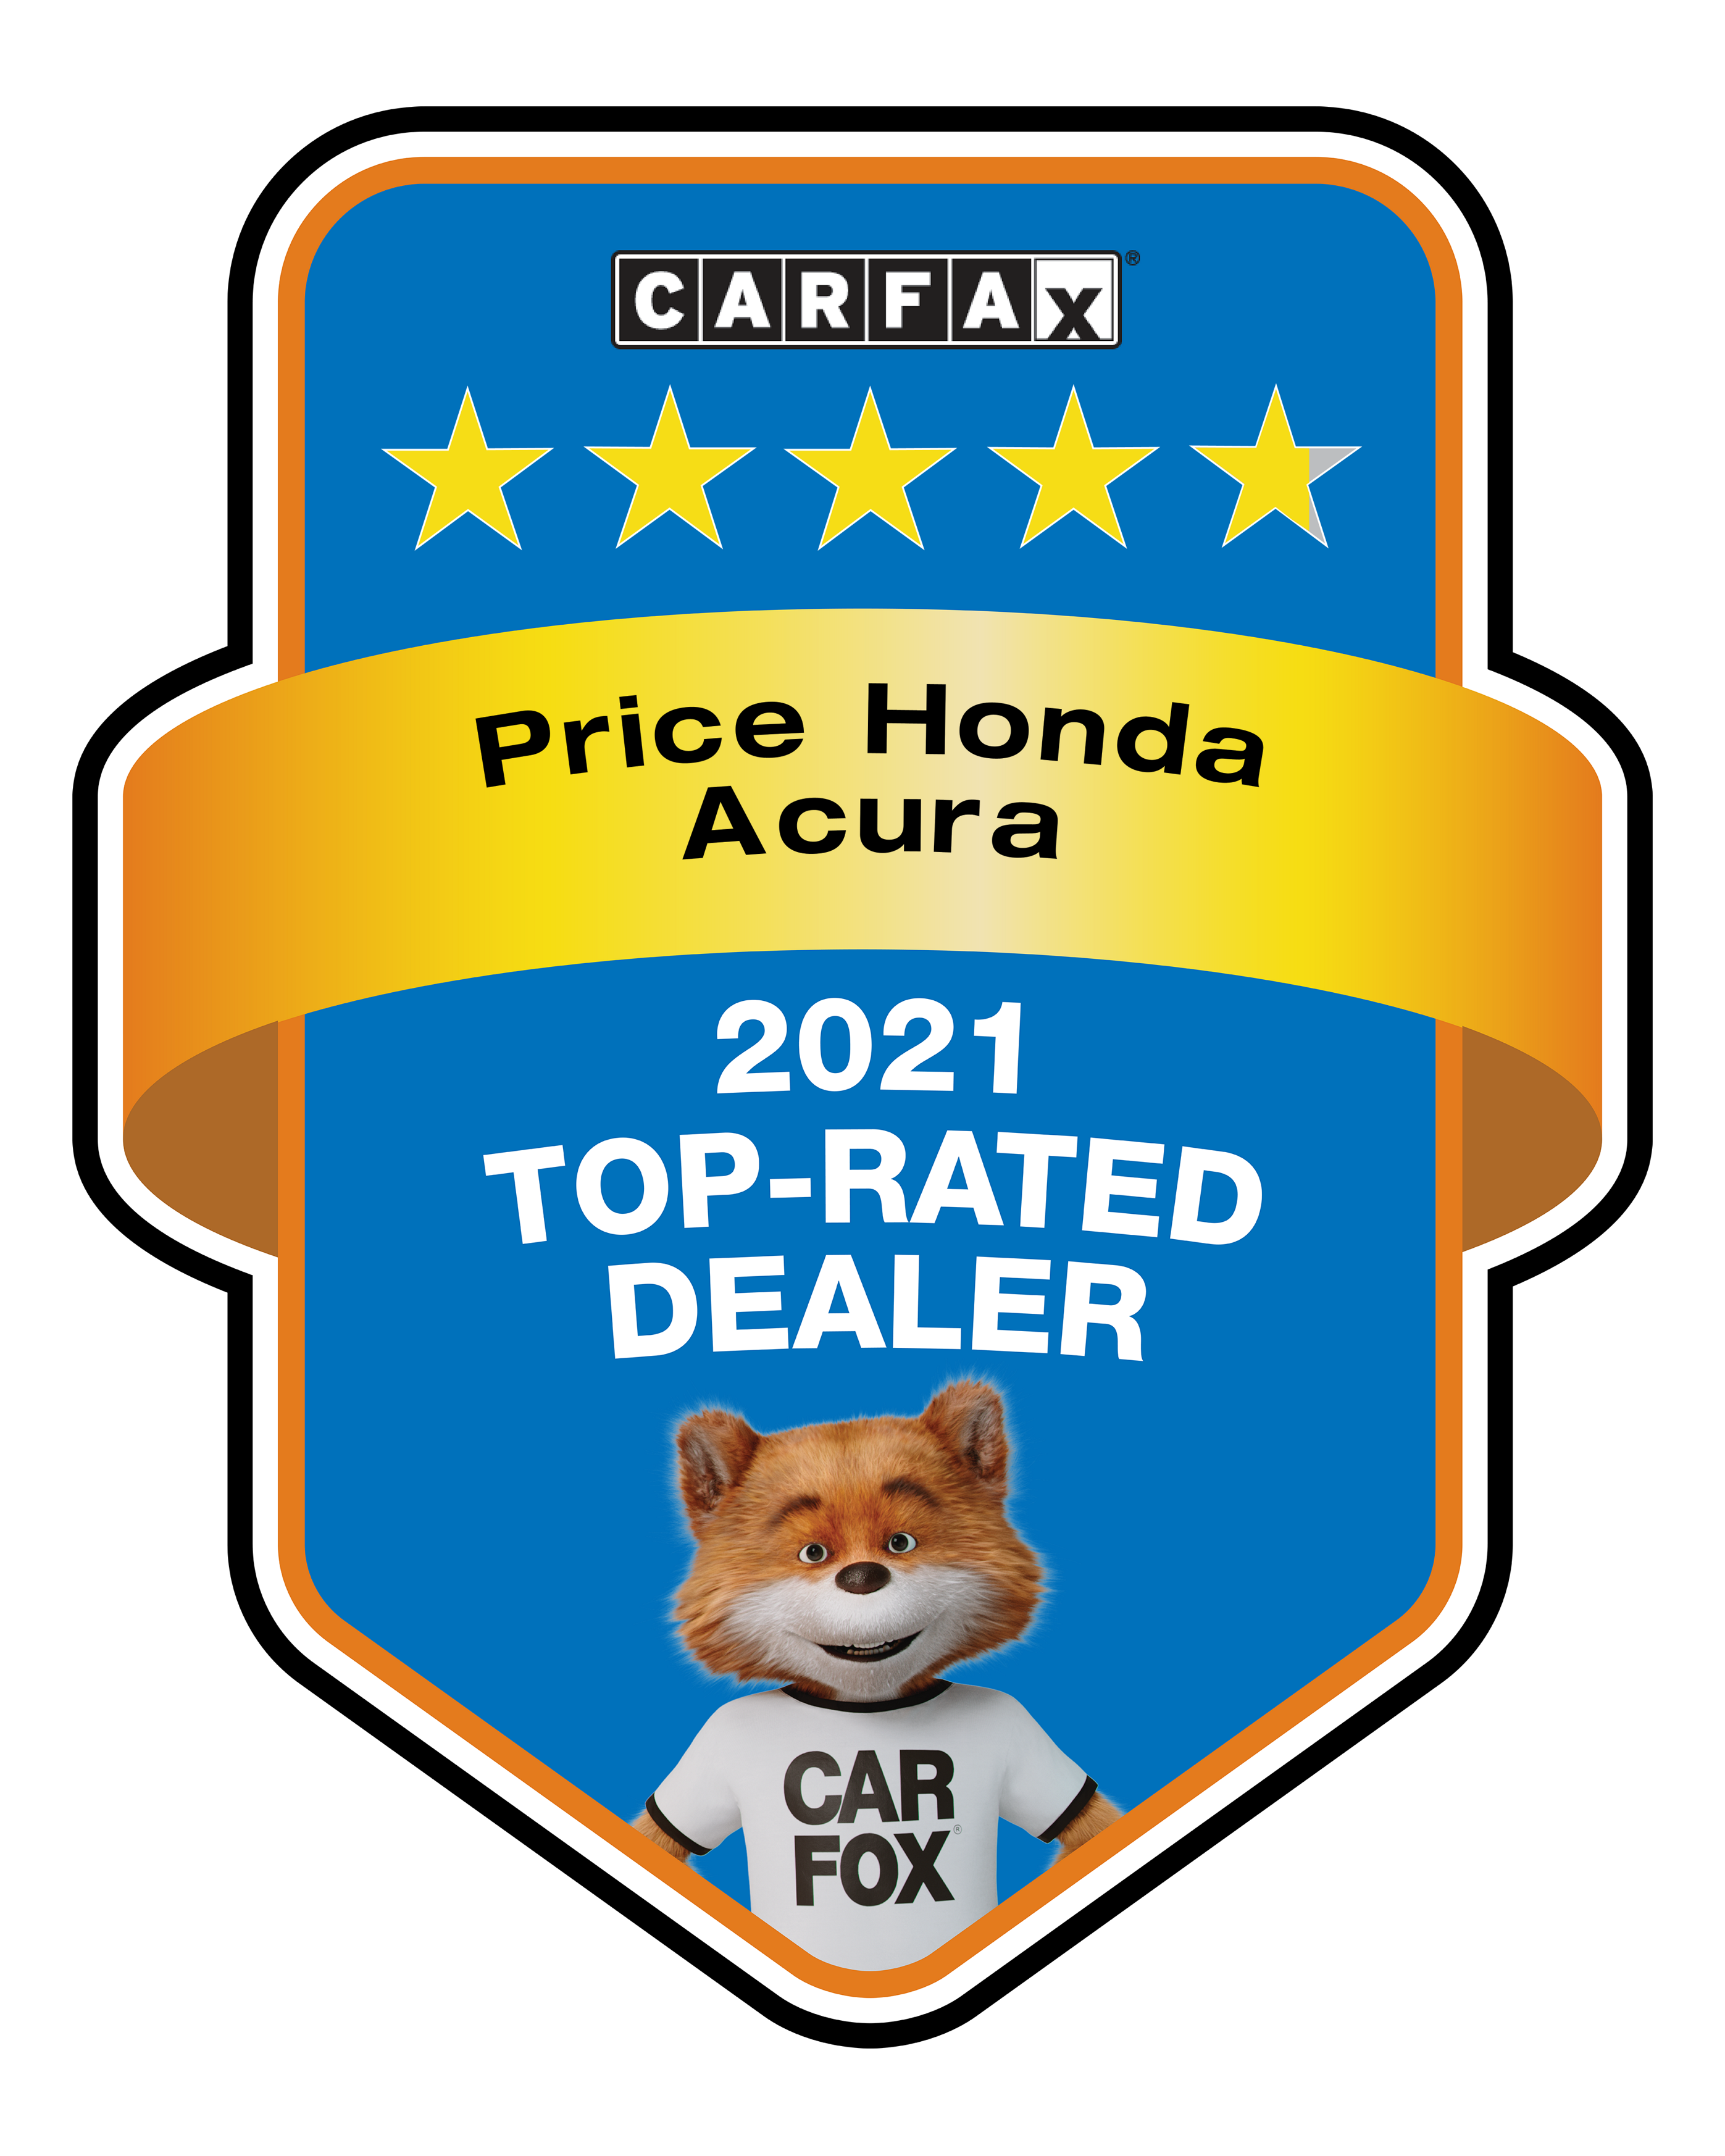 2021 Carfax Award for Used Cars and Service near Delaware, at Price Honda Acura